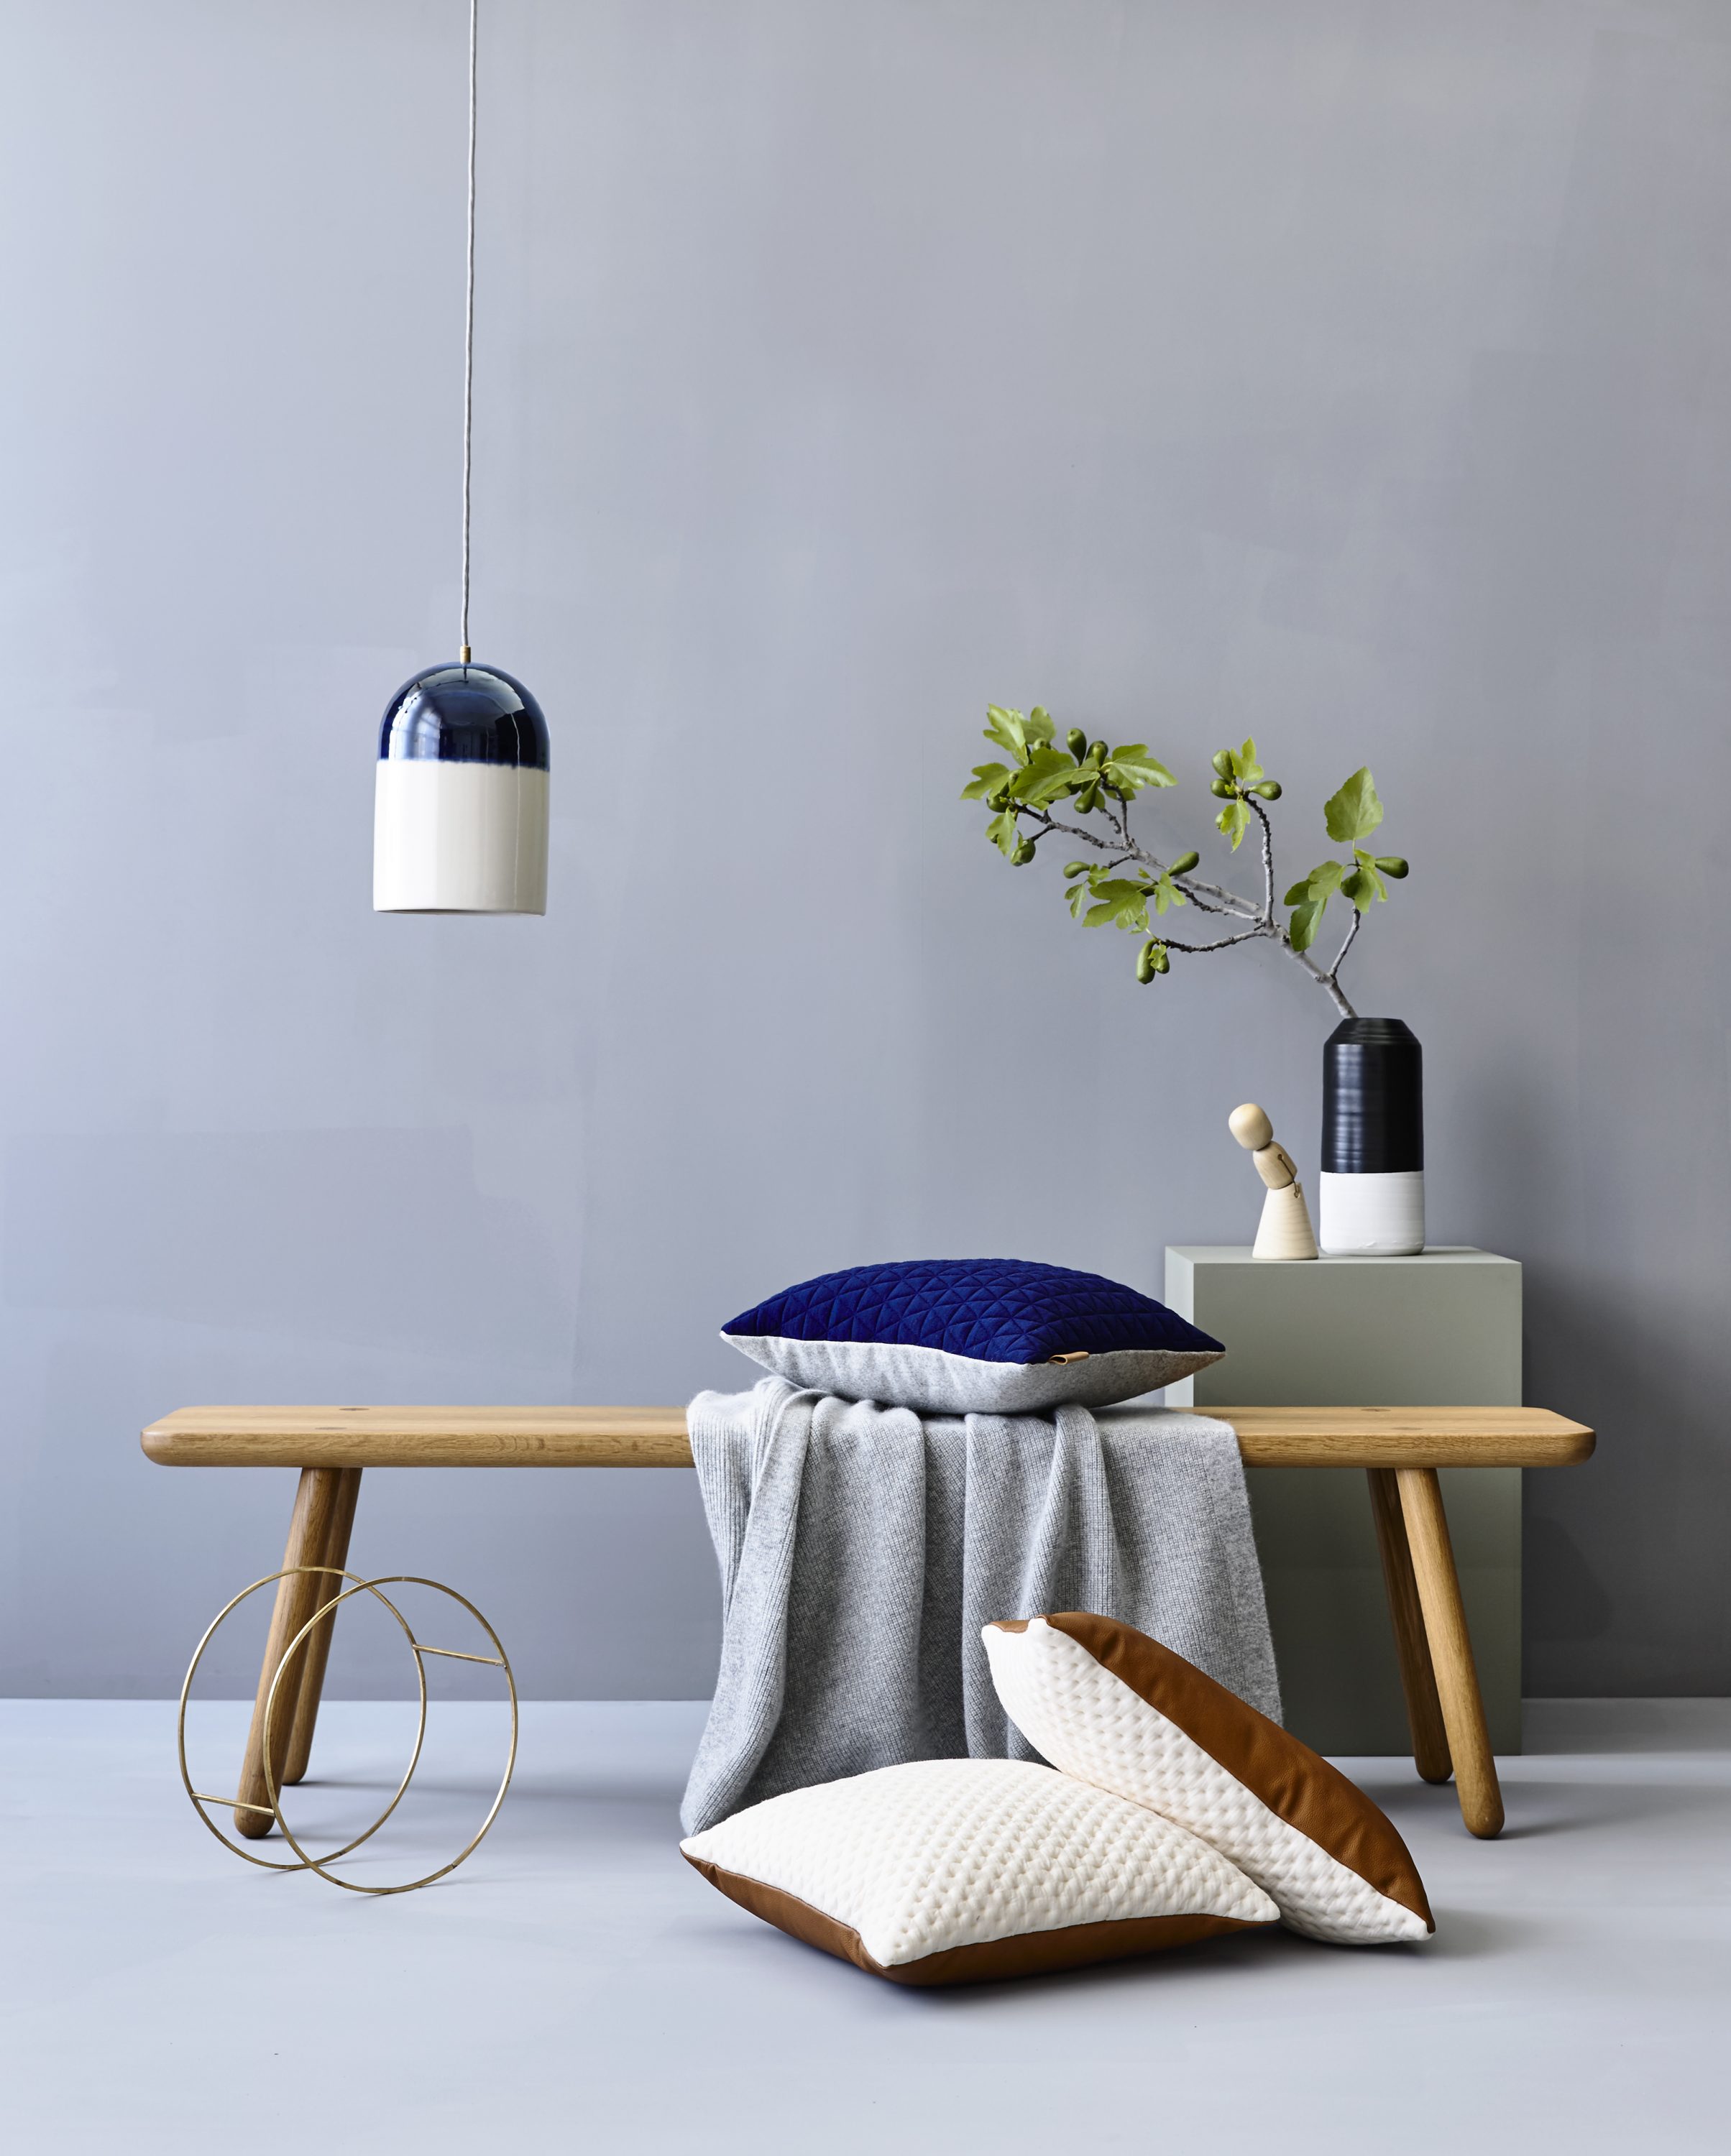 ni.ni. creative - 8 - kumo cushions tawny square. tawny rectangle. blue rectangle - photography by derek swalwell